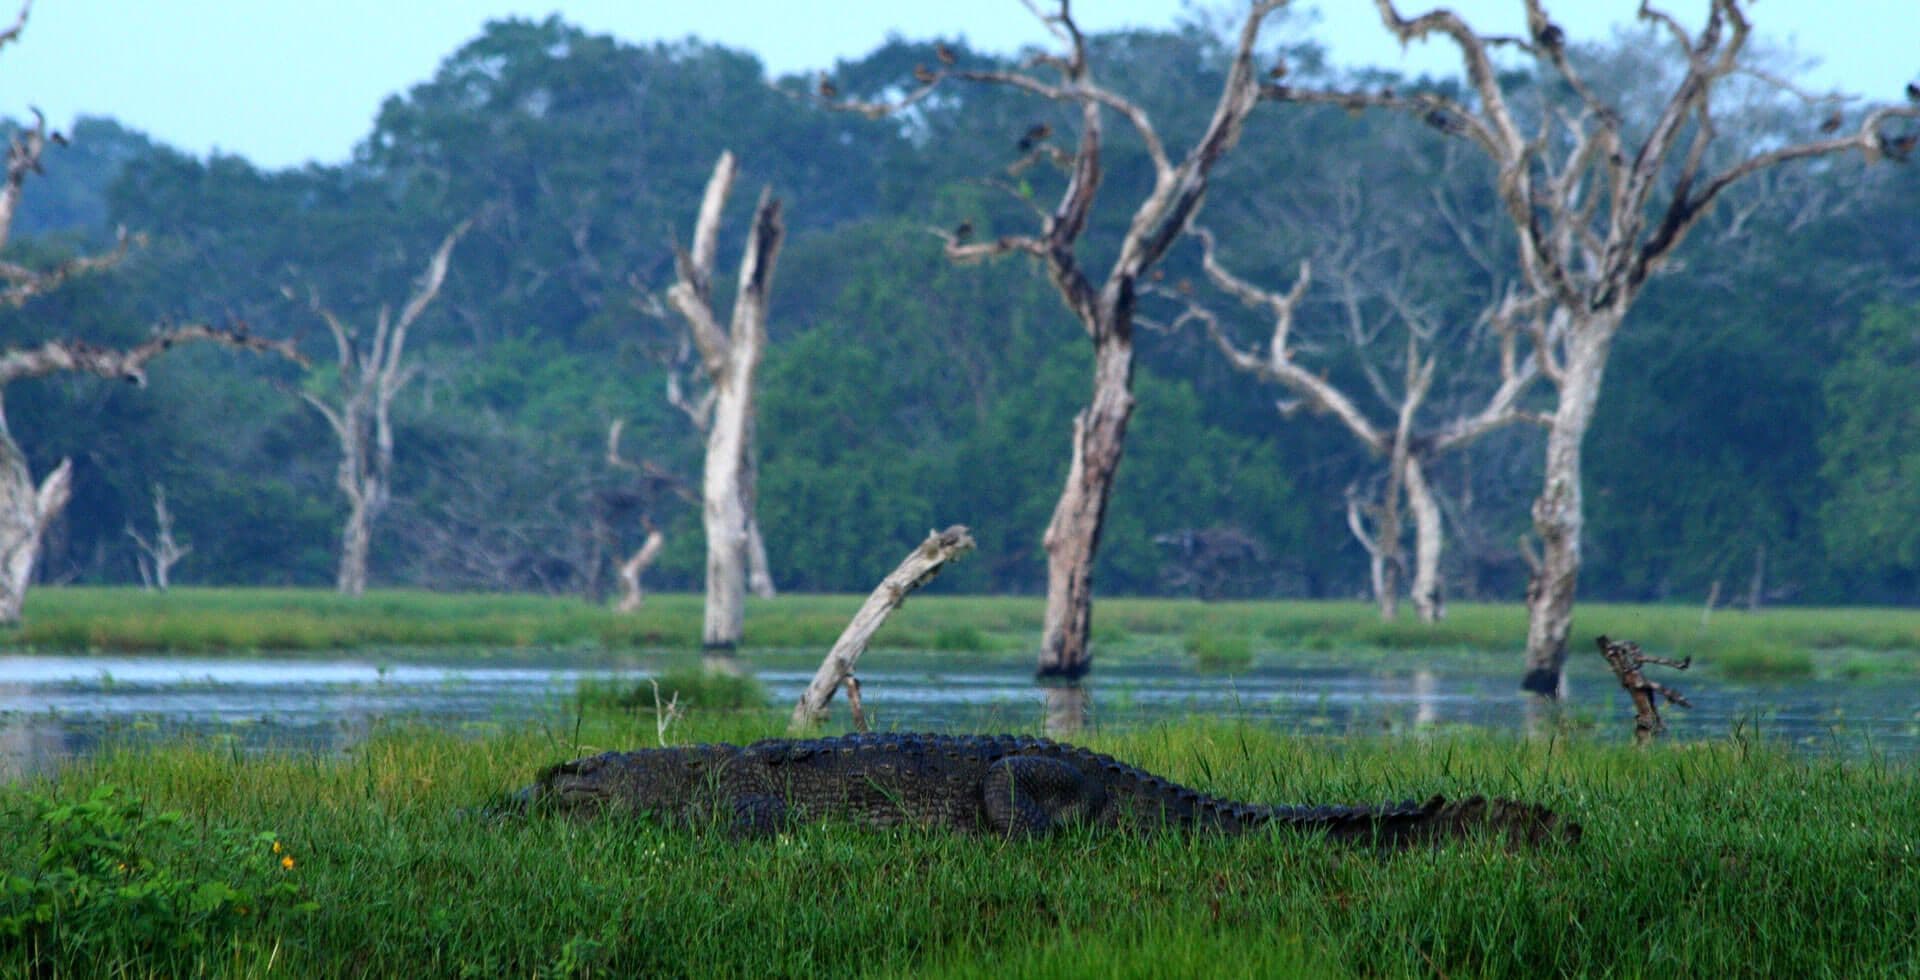 A mugger crocodile hunting for the prey near the small lake in Yala national park, Sri Lanka.